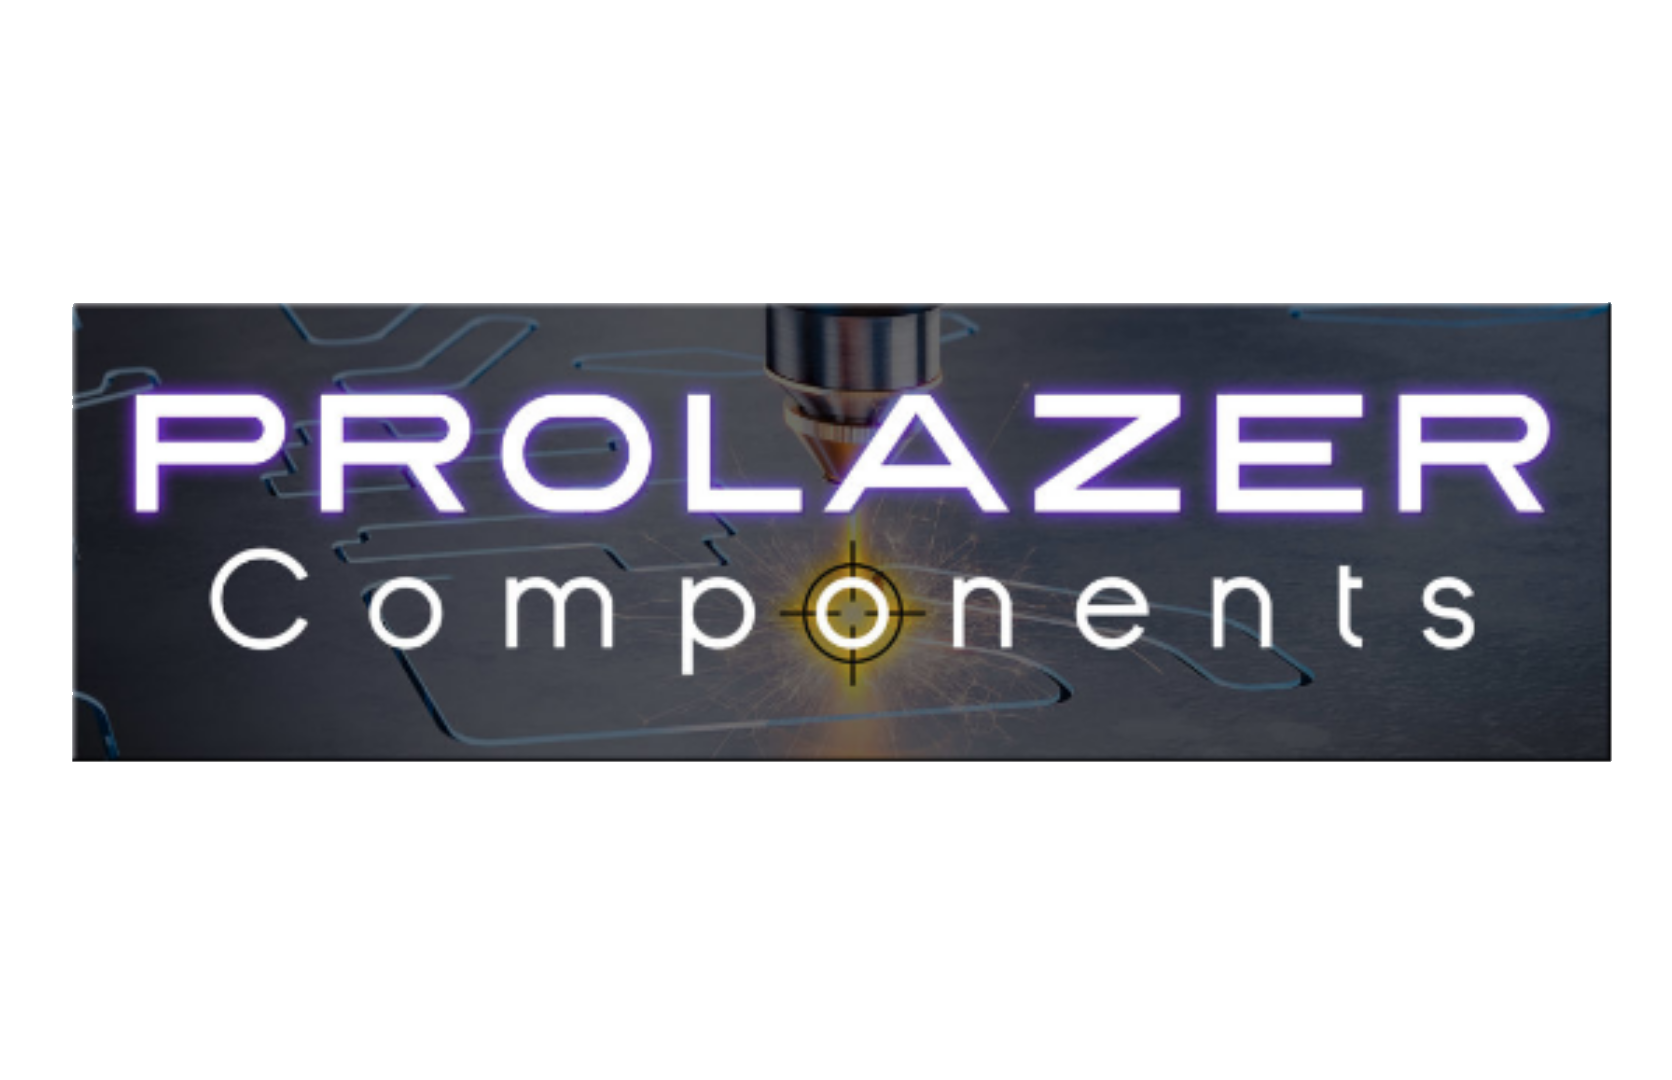 Prolazer Components